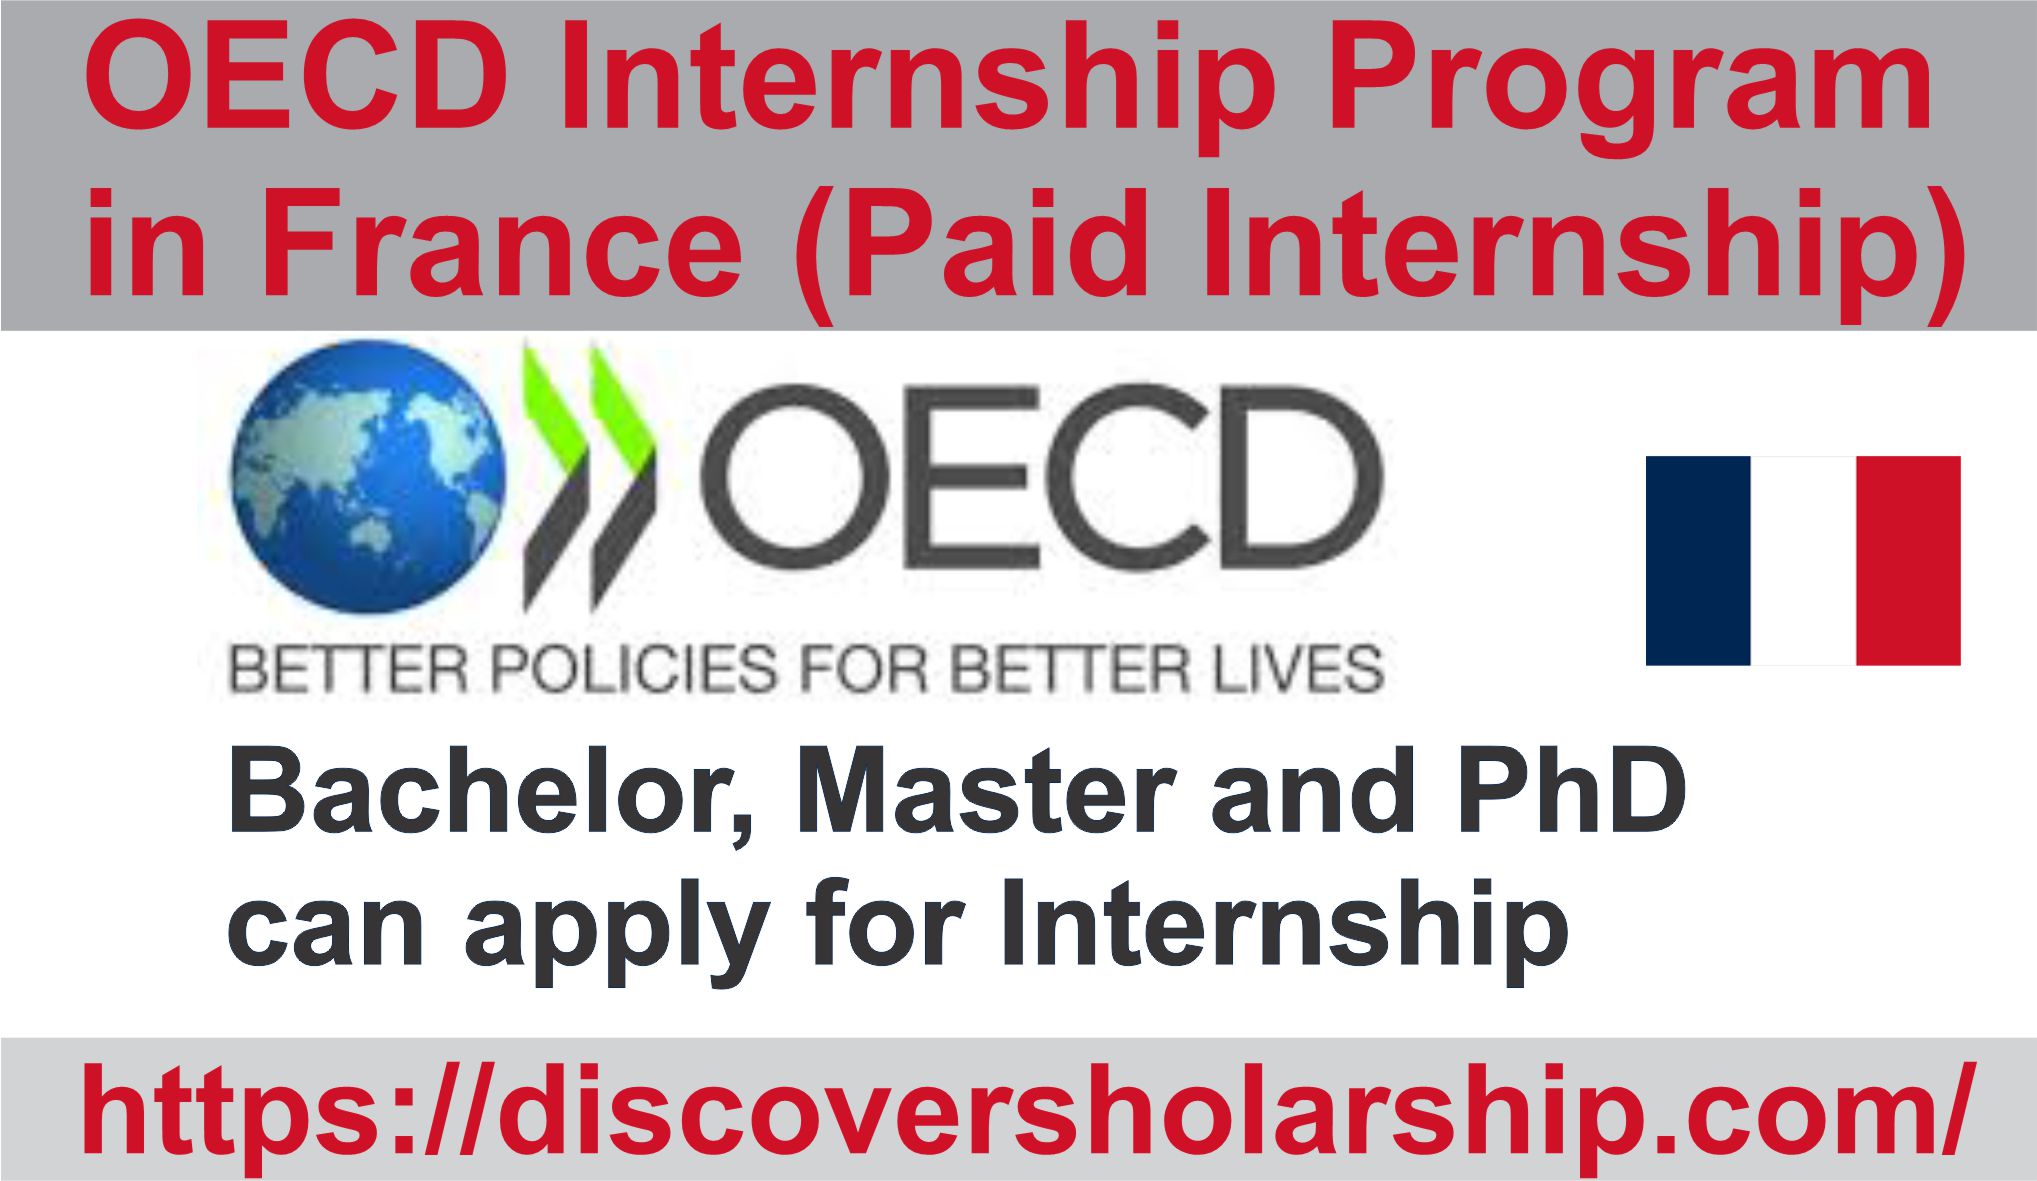 OECD Internship Program in France (Paid Internship)